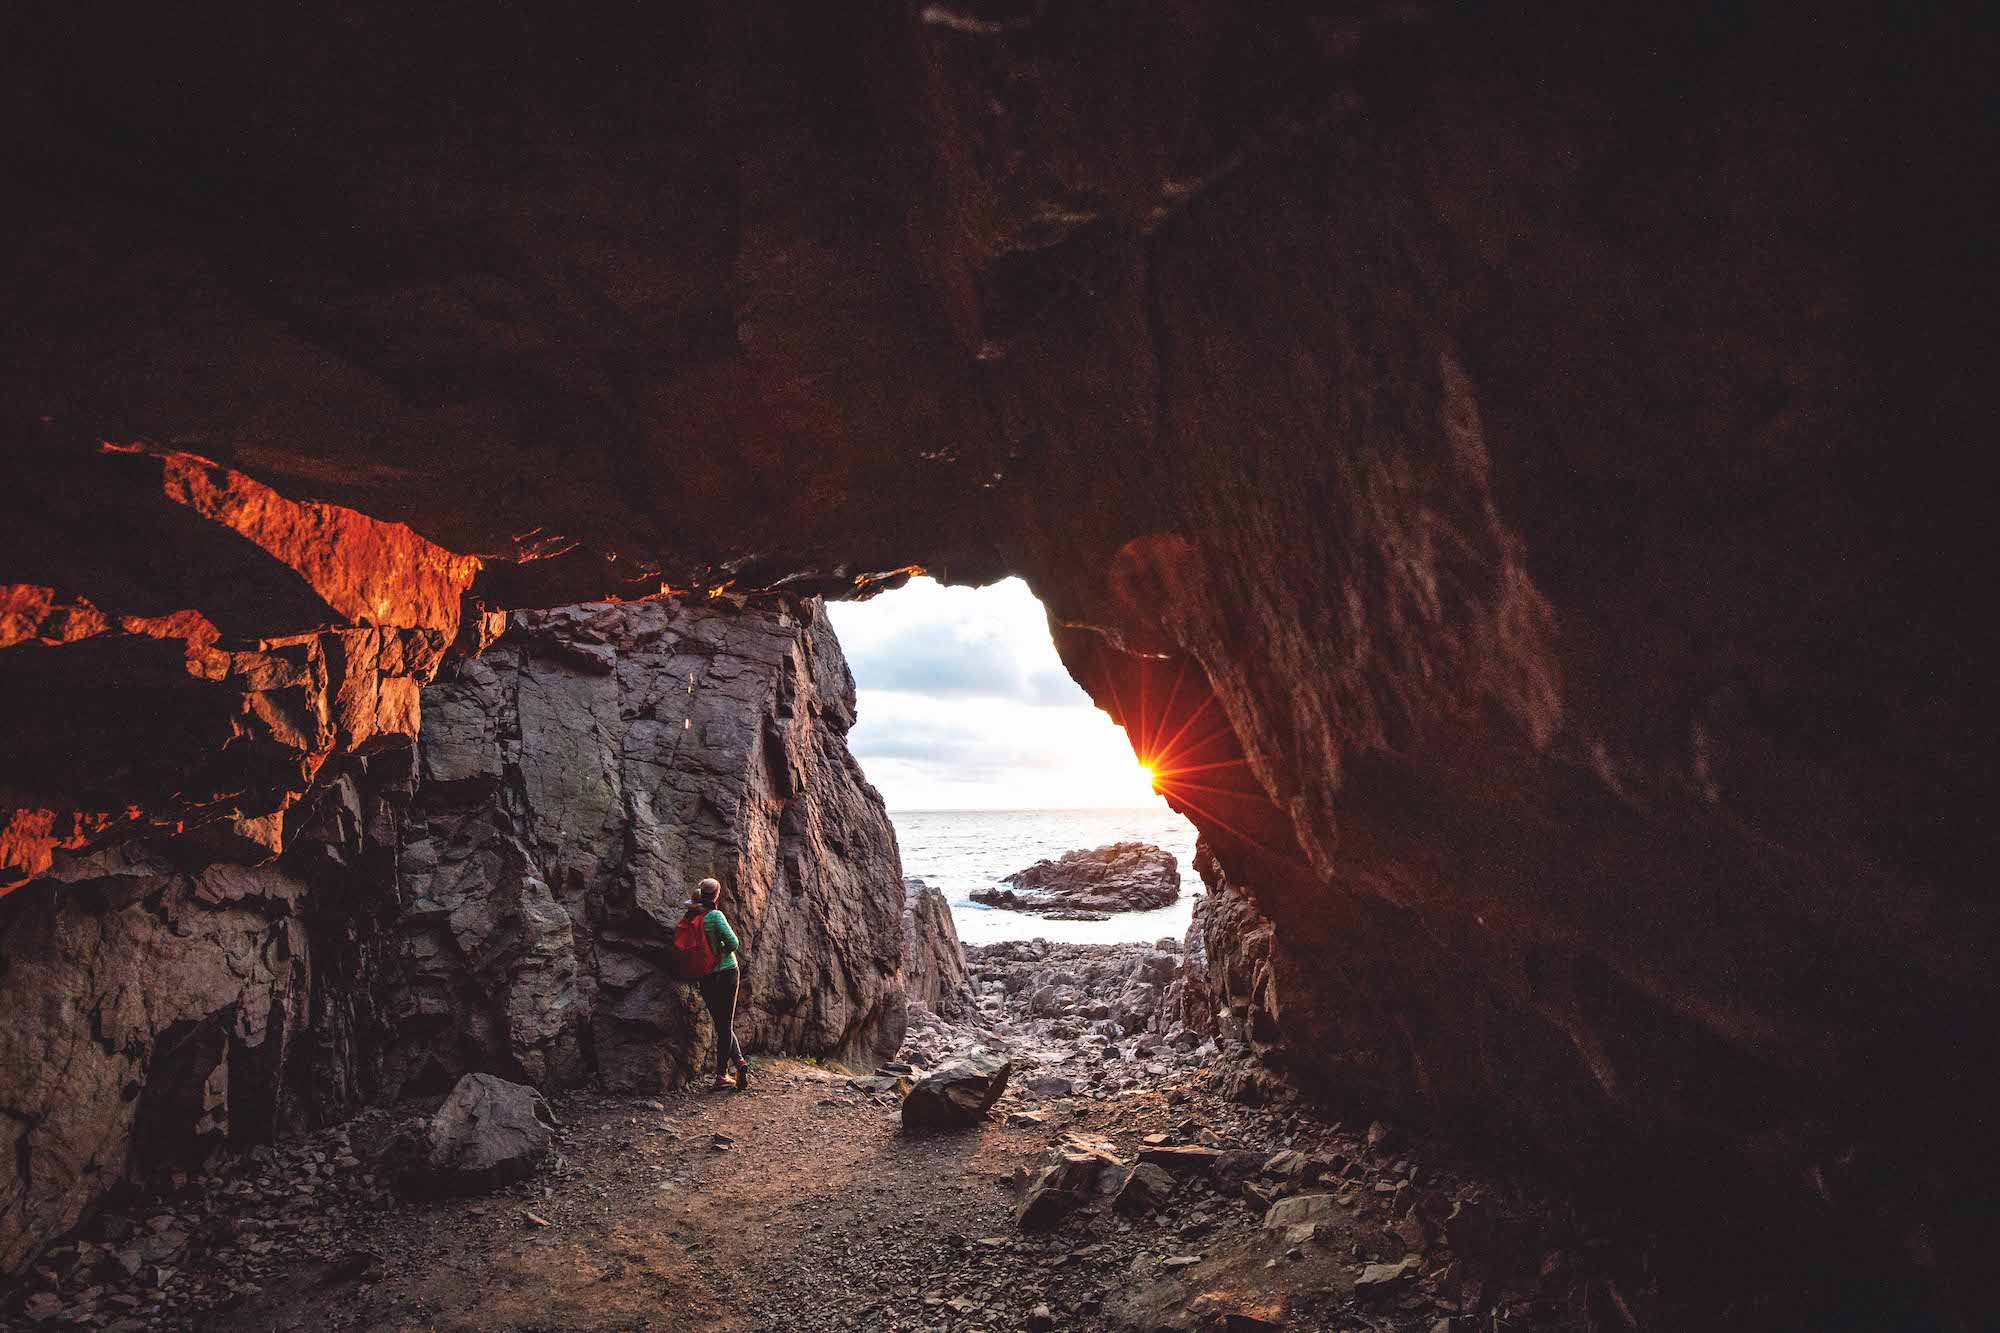 Bearbeitet: Höhle am Meer in Schweden